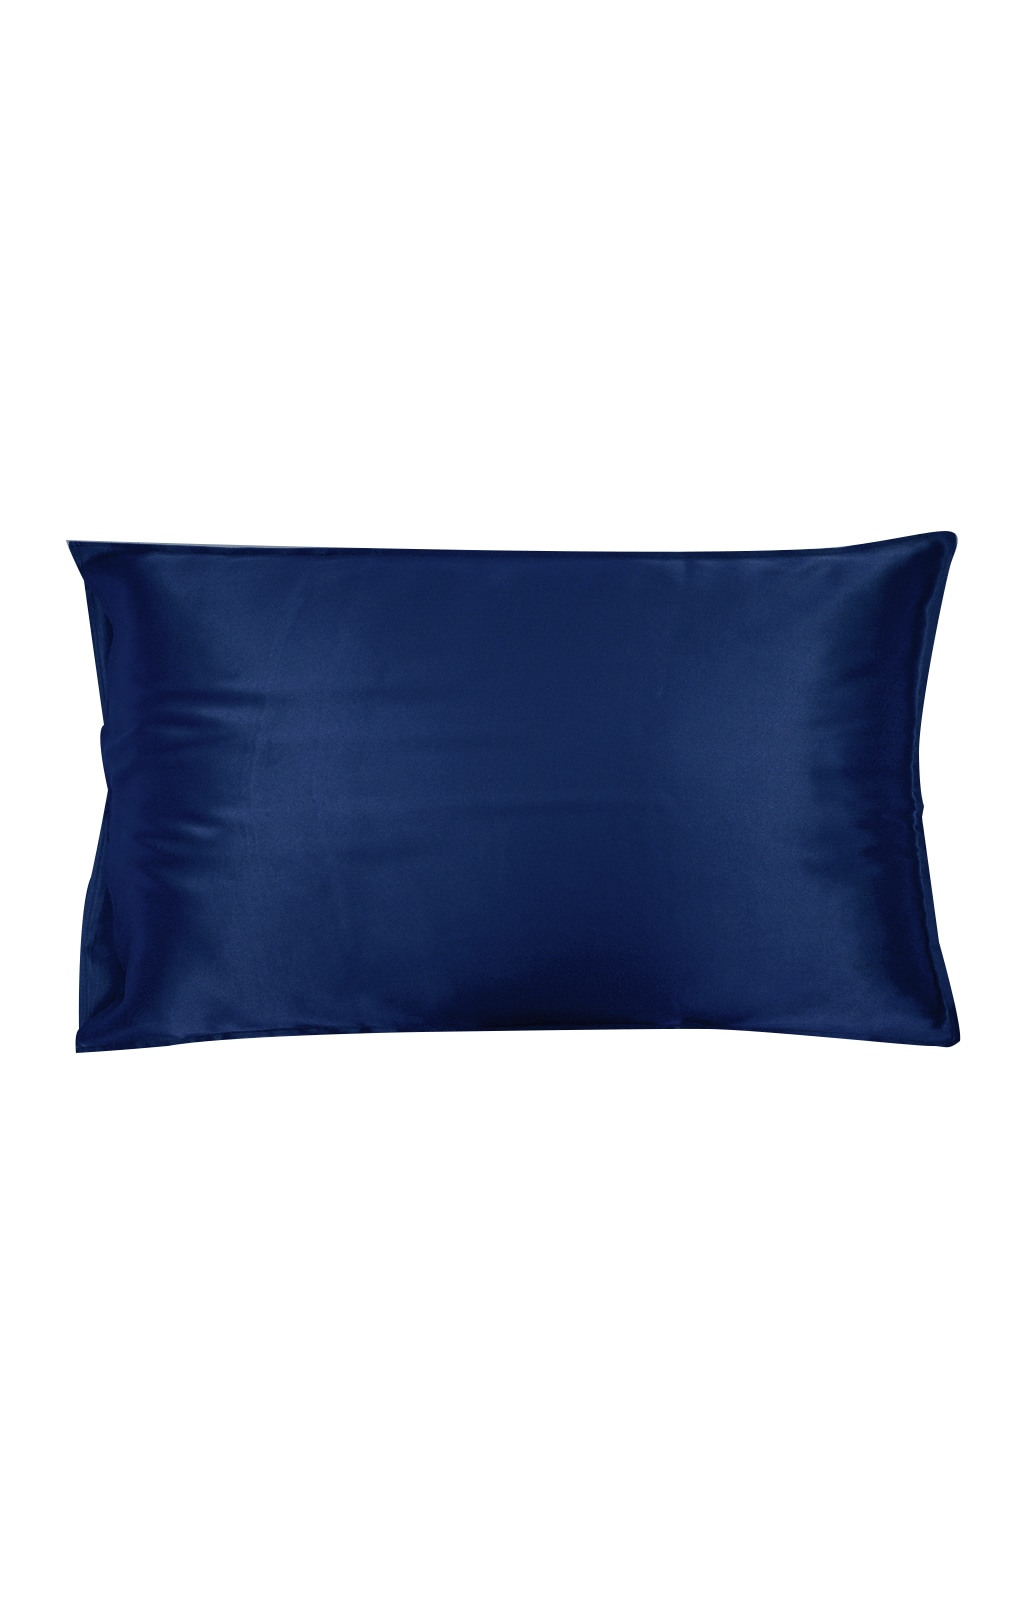 Silk pillowcase, king size, navy blue